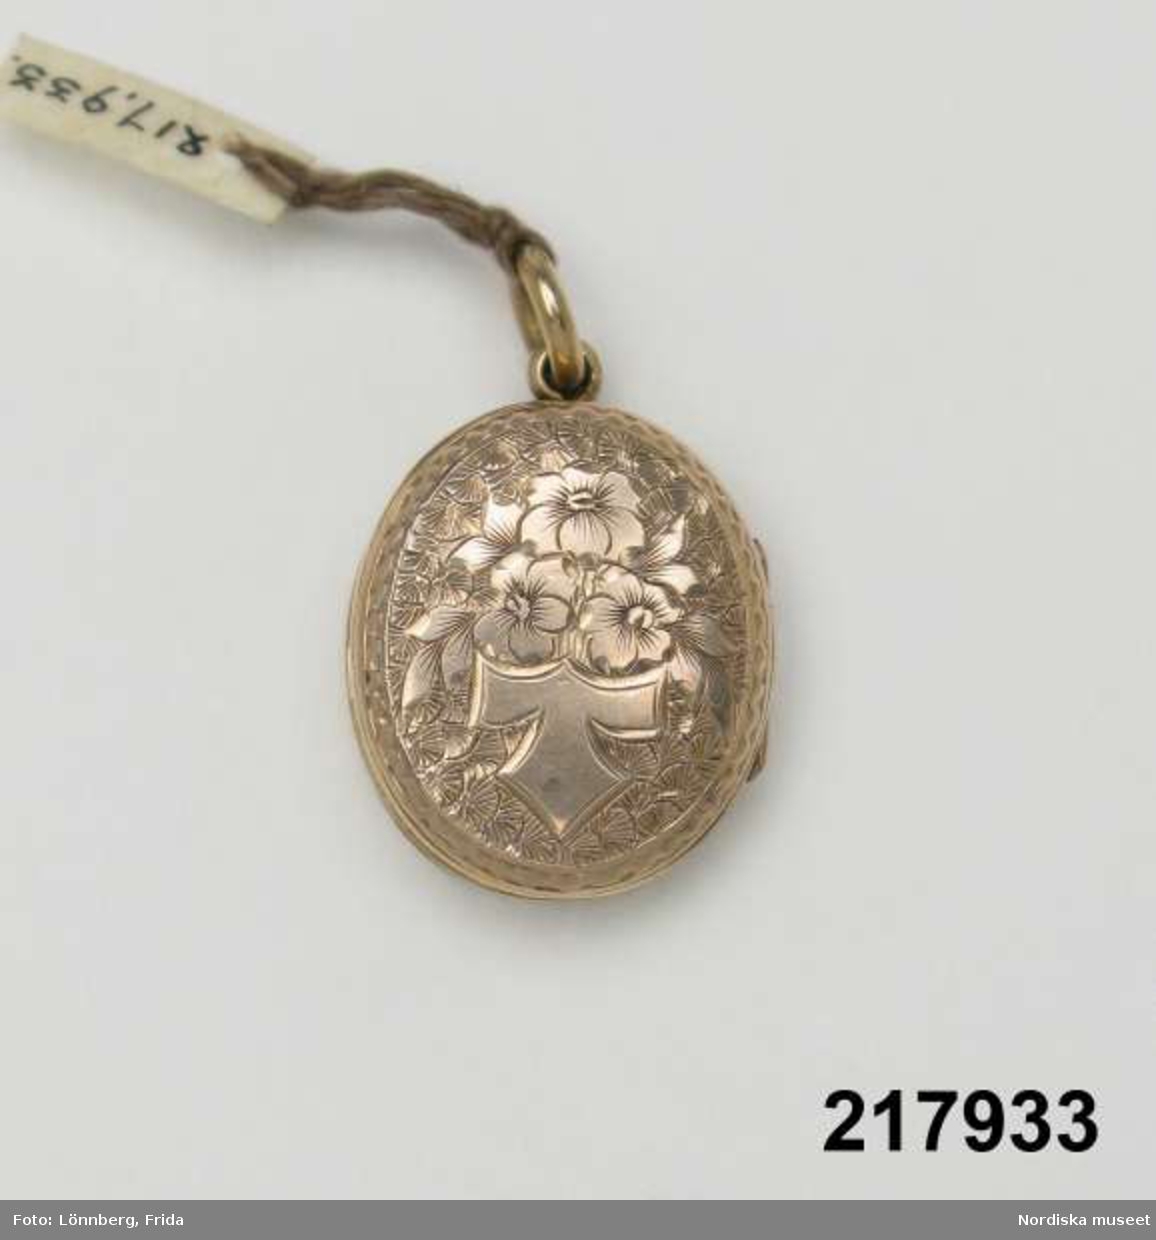 Katalogkort:
"Medaljong, guld med blå emalj,
H. 2,7 cm

Innehåller hårlock."